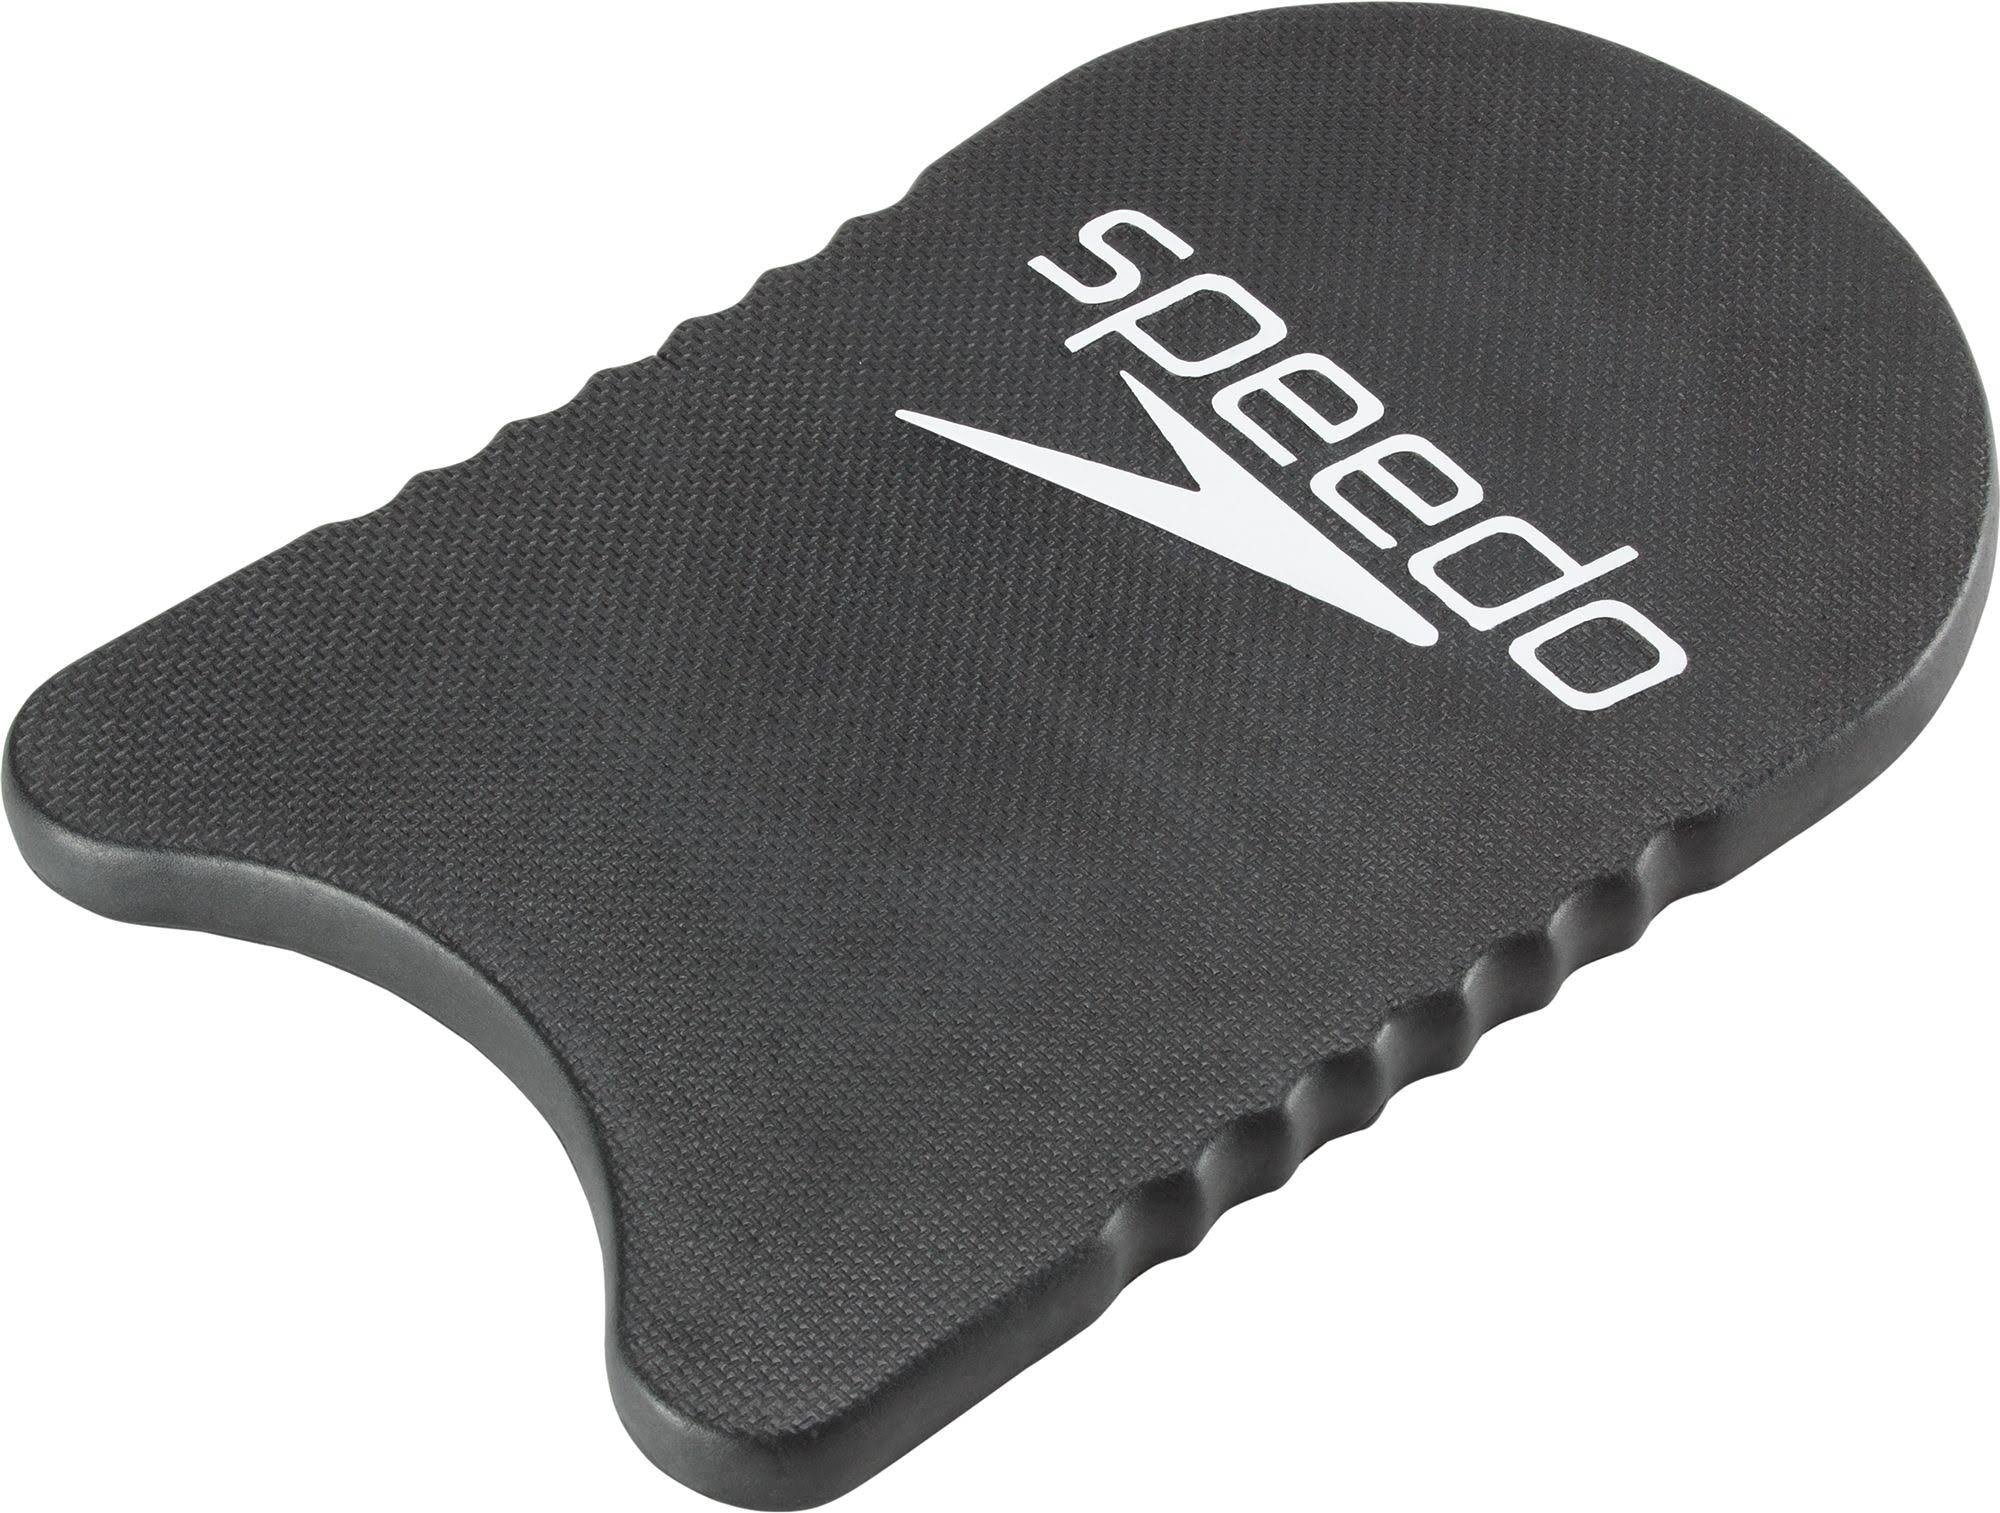 Speedo Team Kickboard - Black, One Size